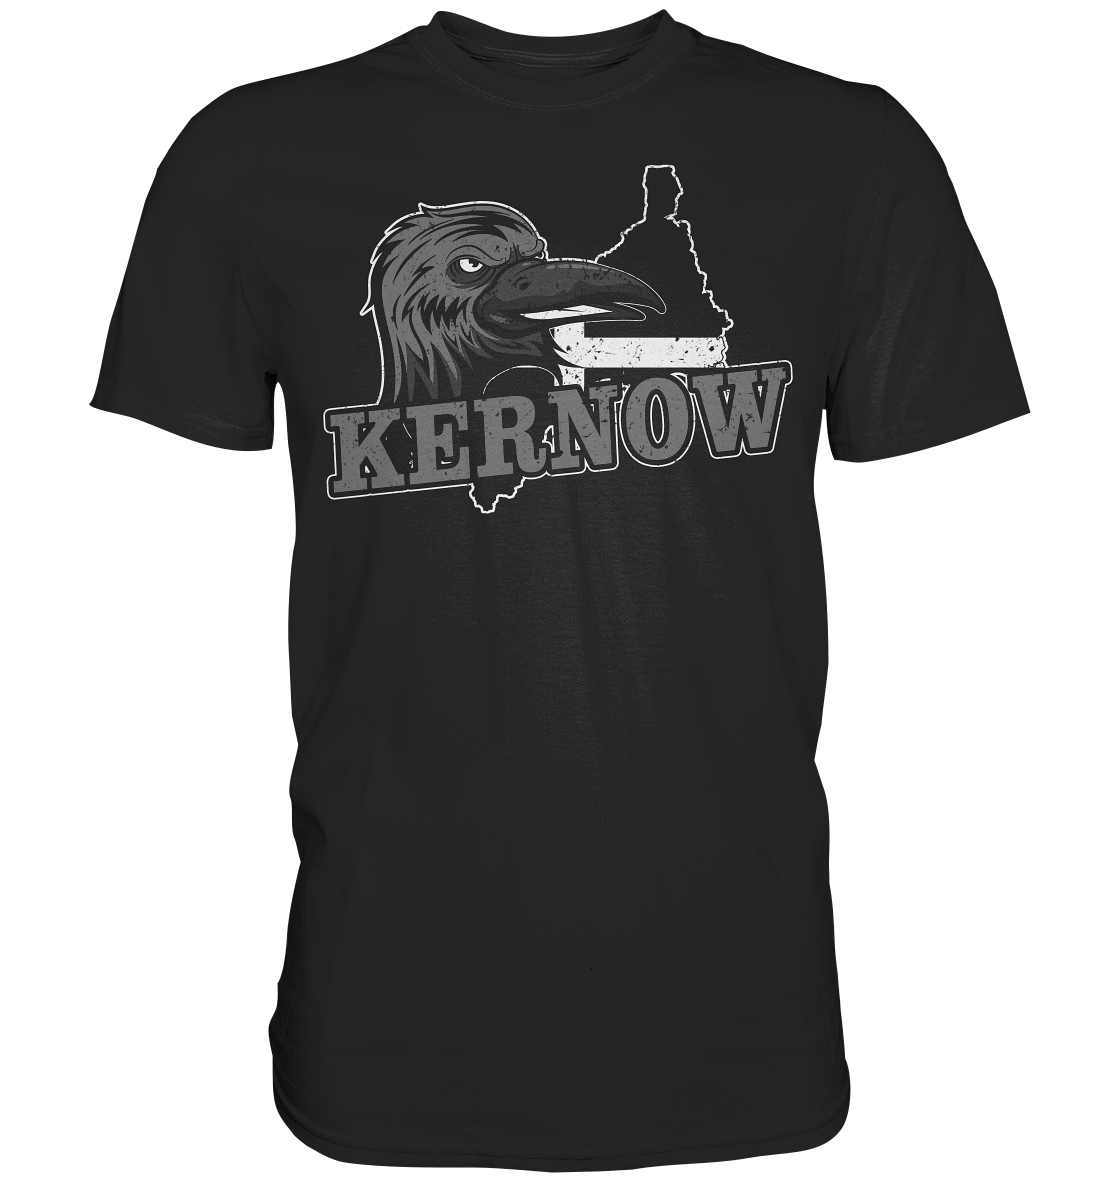 Celtic Nation "Cornwall / Kernow" - Premium Shirt